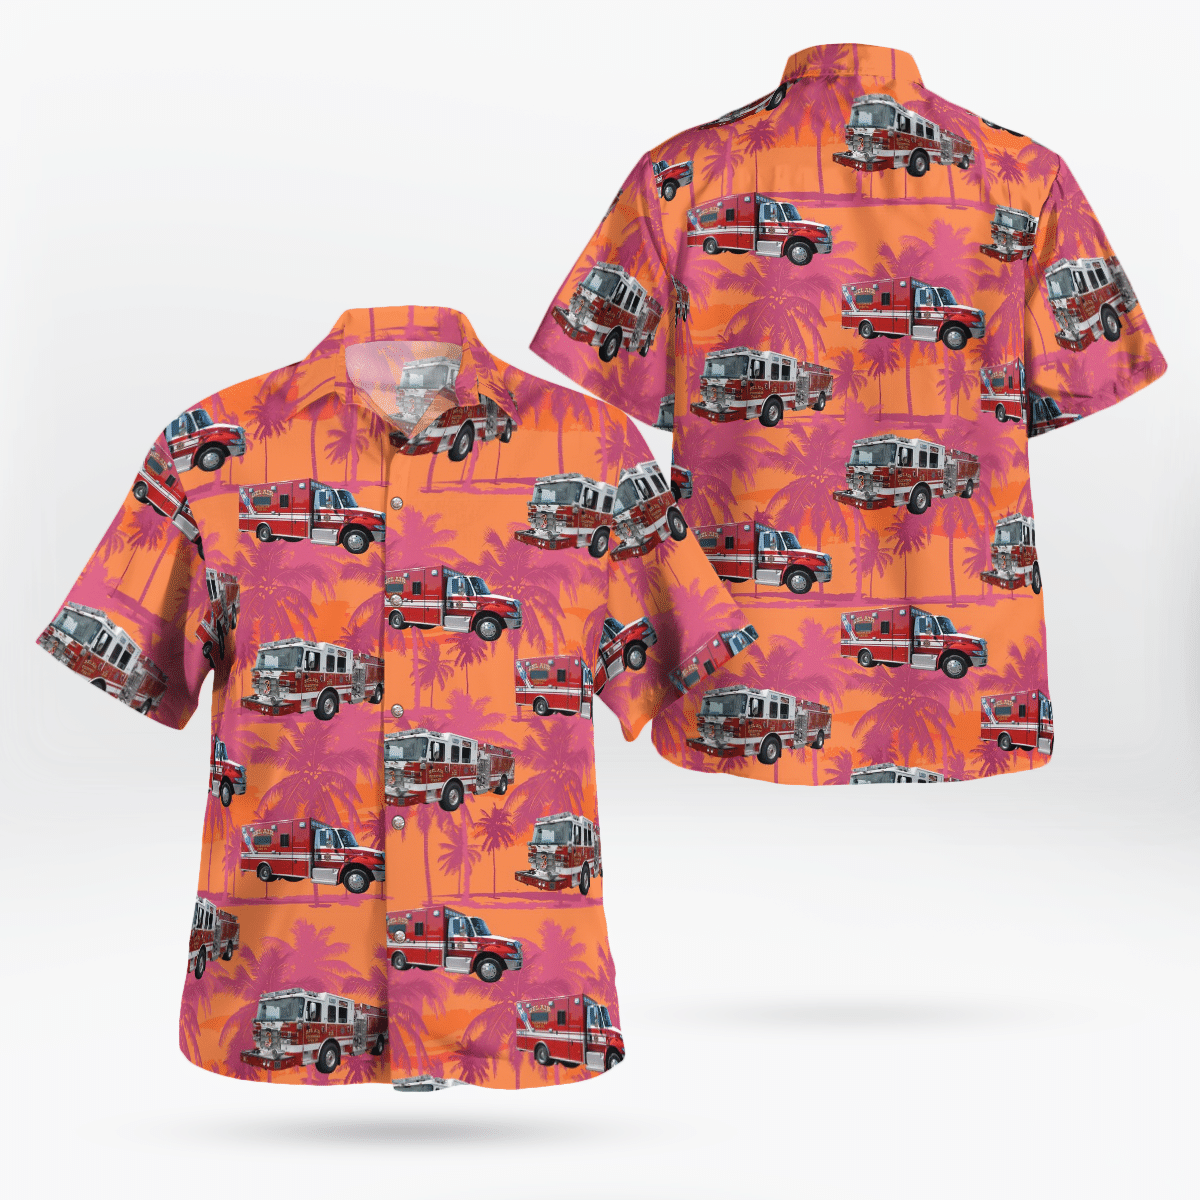 Why don't you order Hot Hawaiian Shirt today? 95